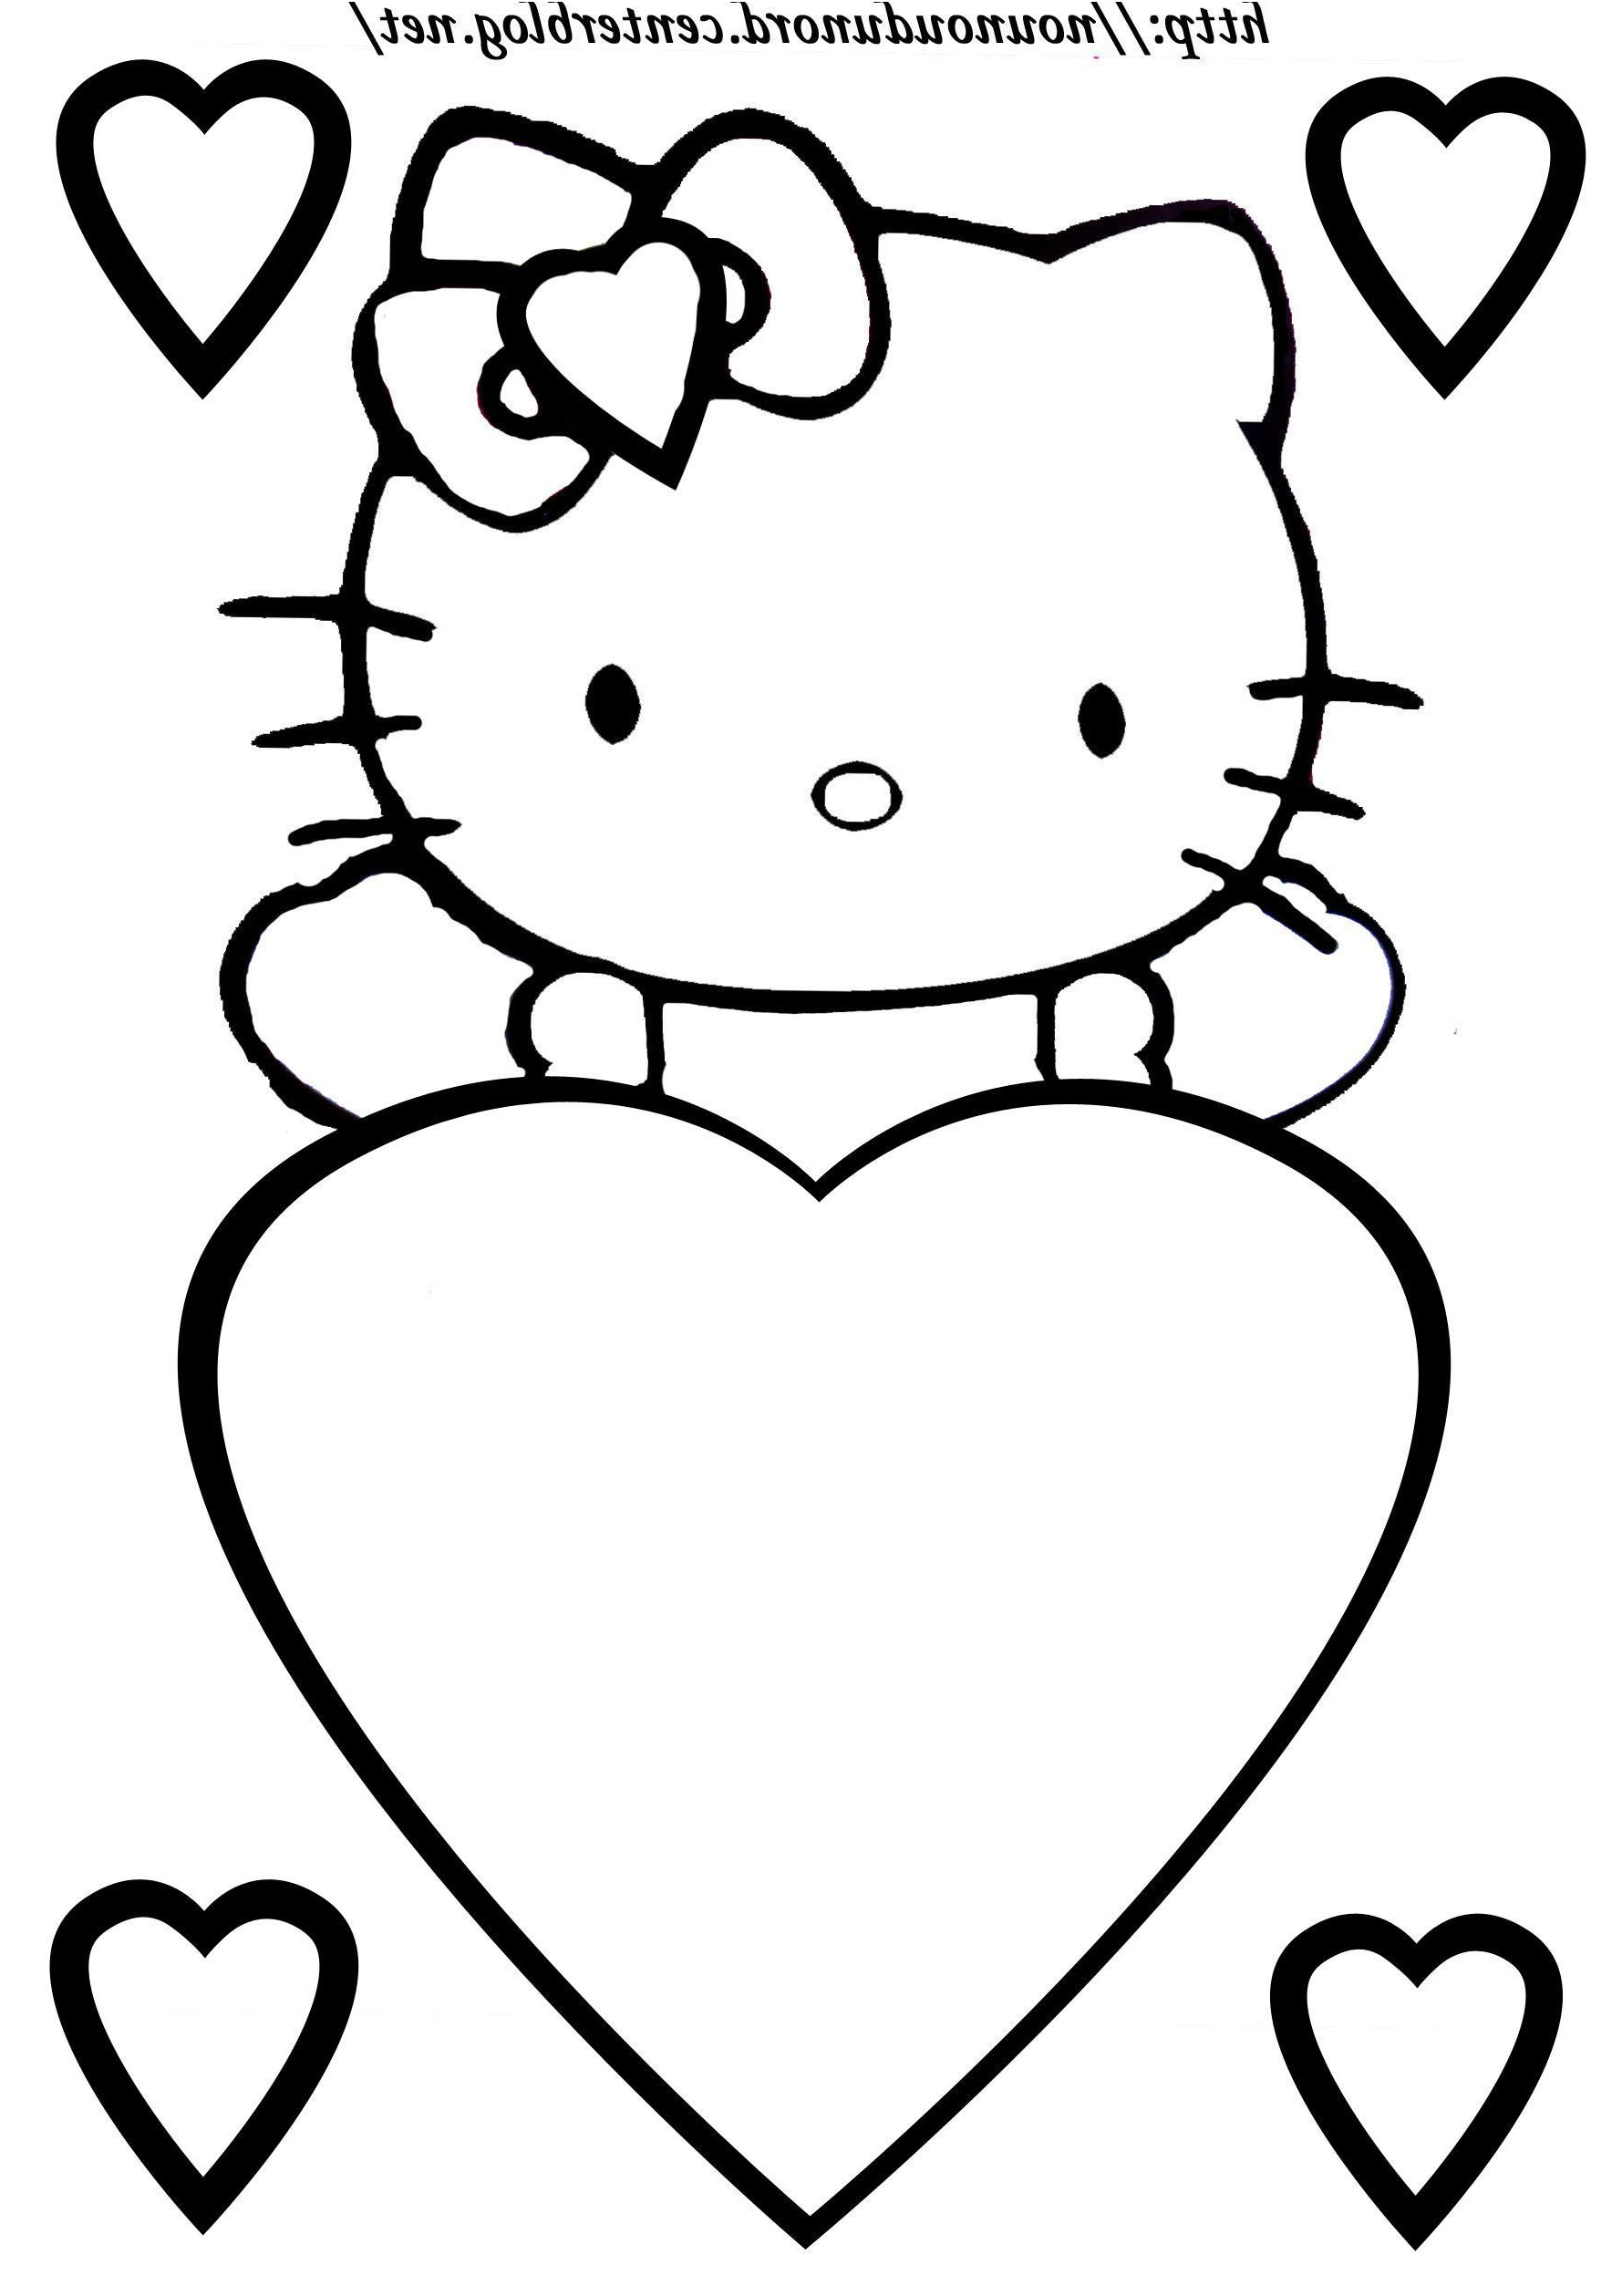 1571 coloriage coeur hello kitty dessine par nounoudunord